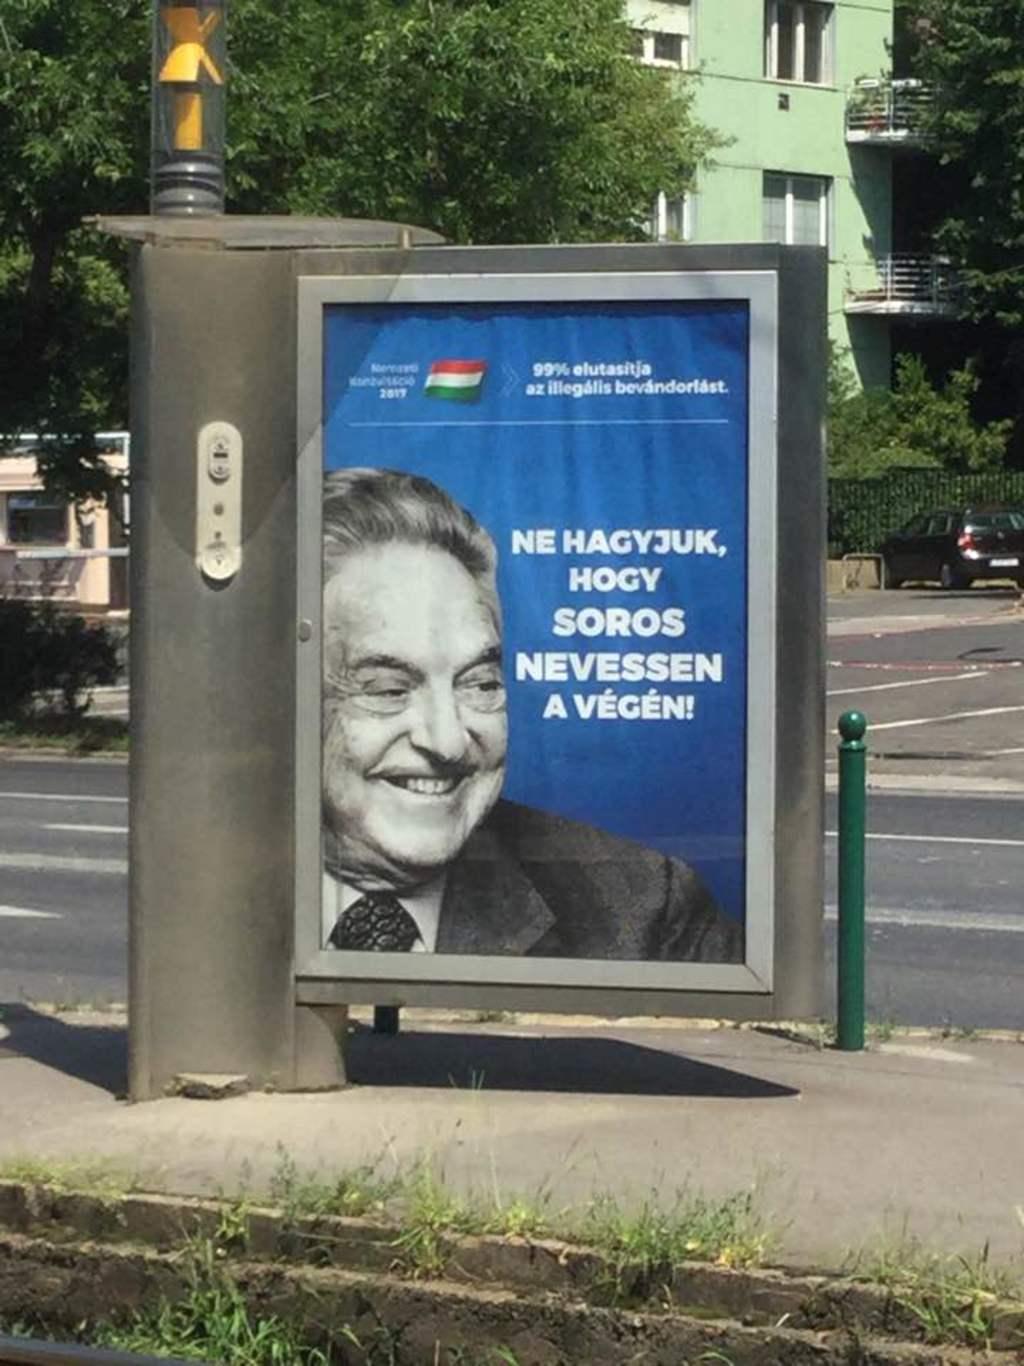 An anti-Soros poster in Hungary